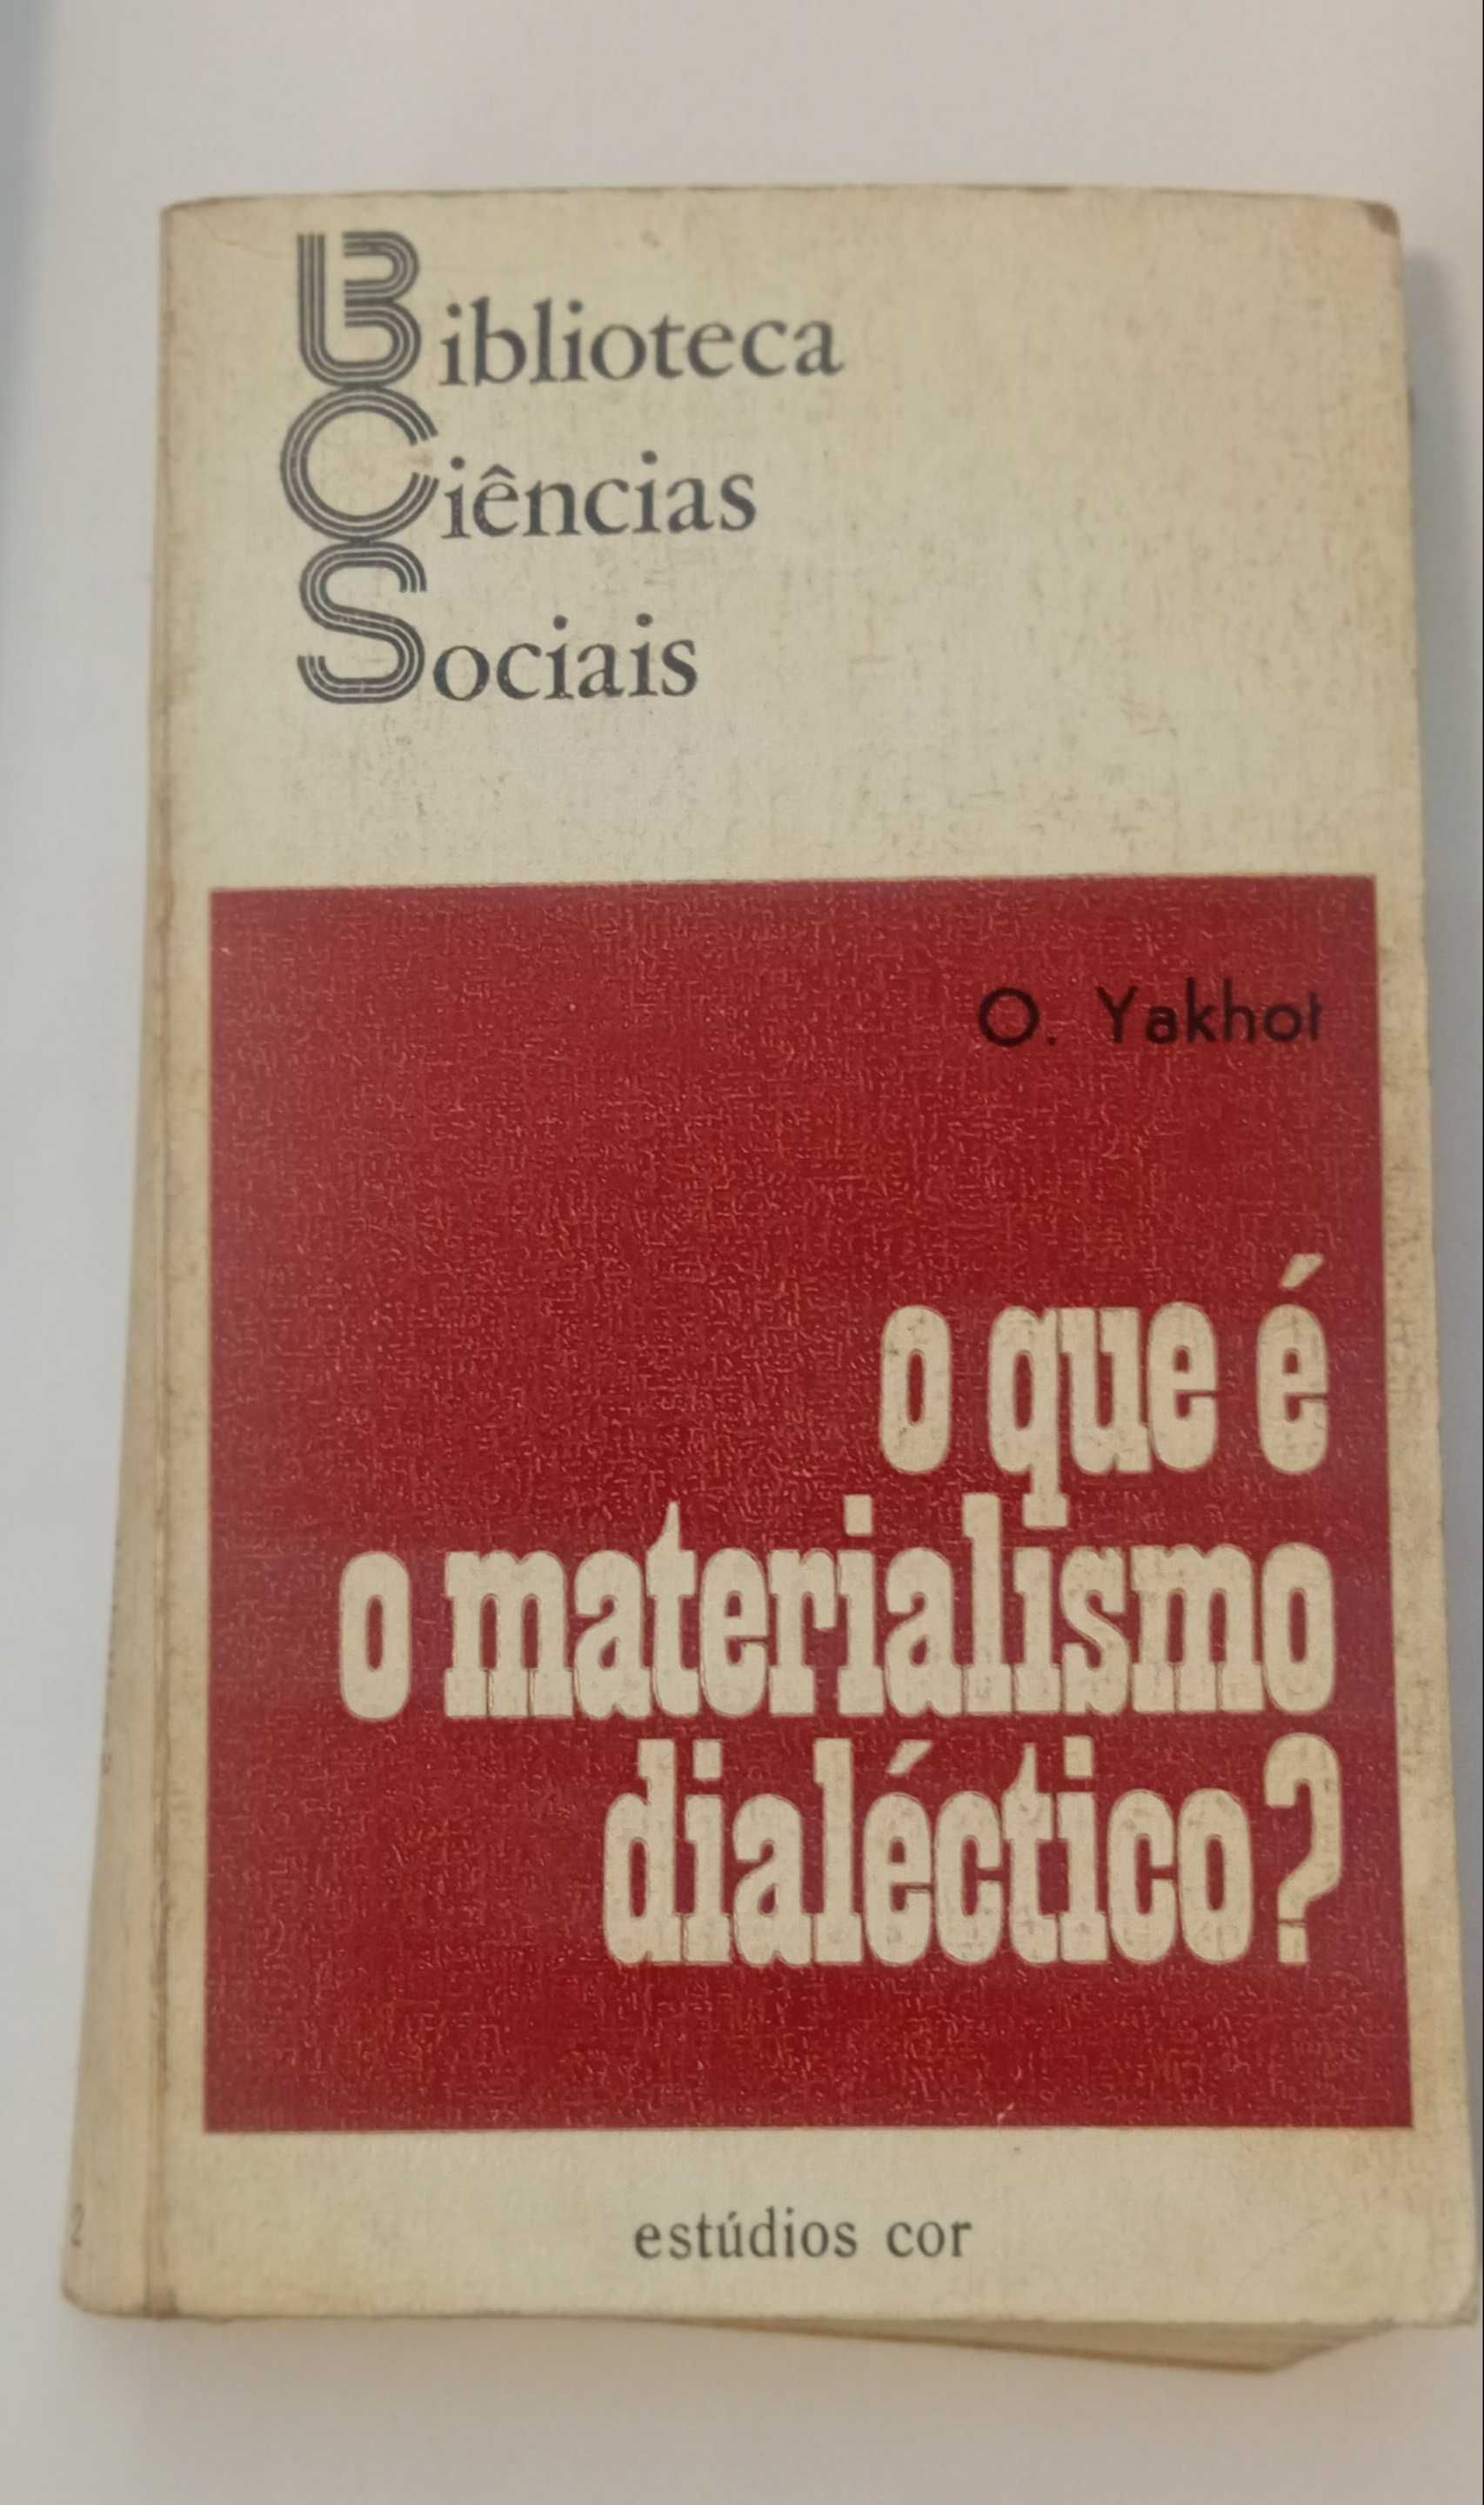 O que é o materialismo dialéctico?, de O. Yakht